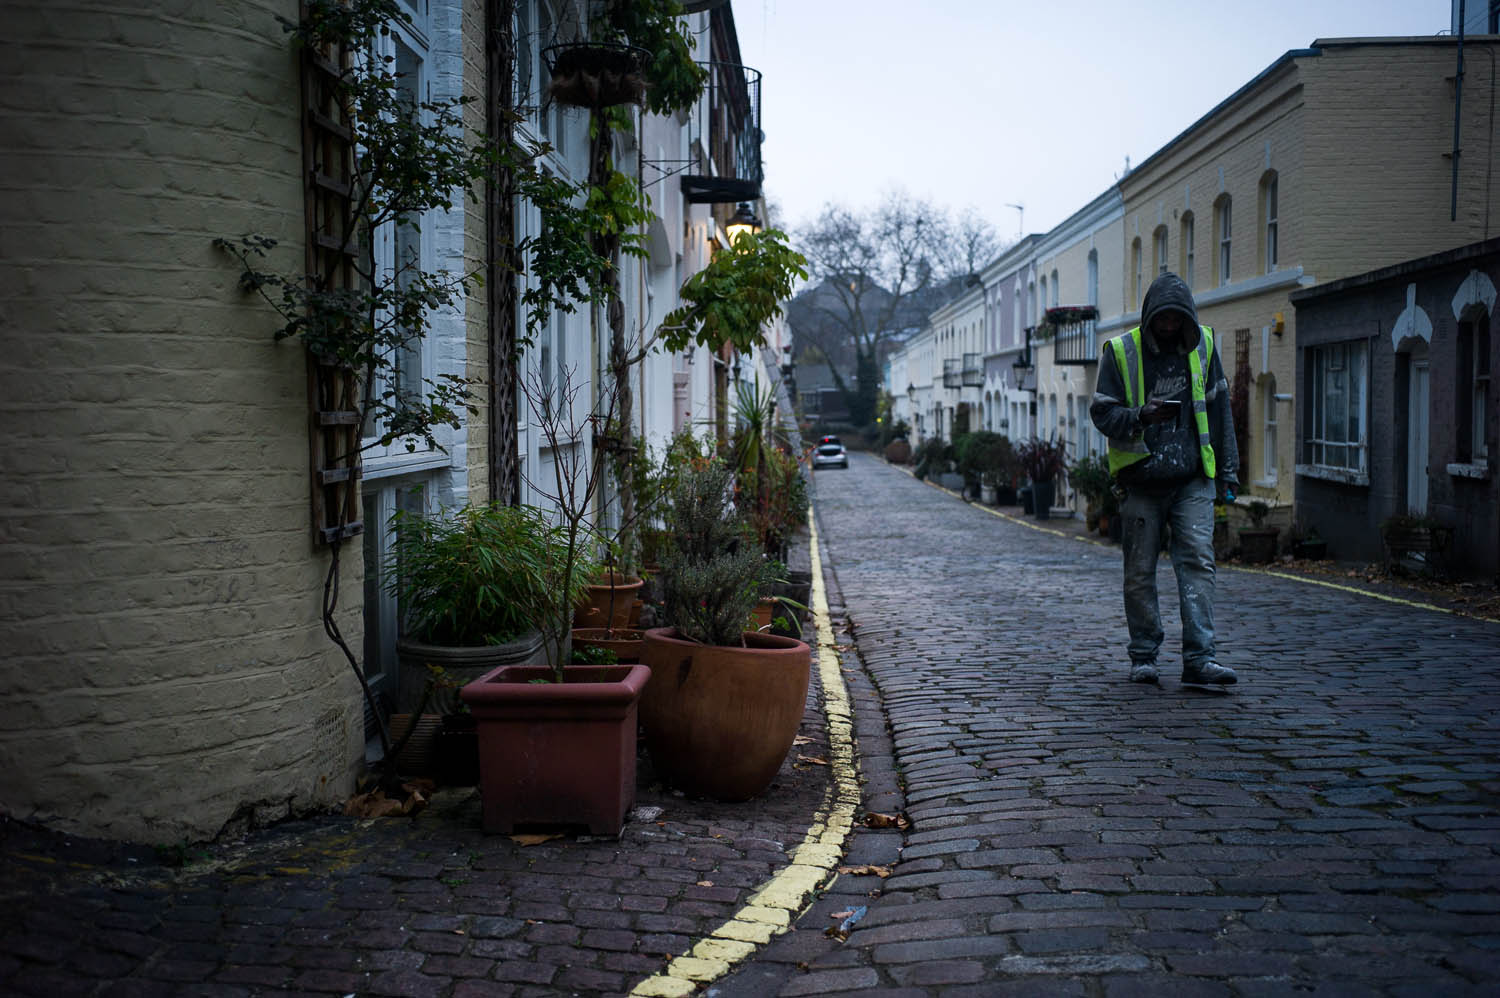 A worker in a reflective vest walks through a cobblestone street in London